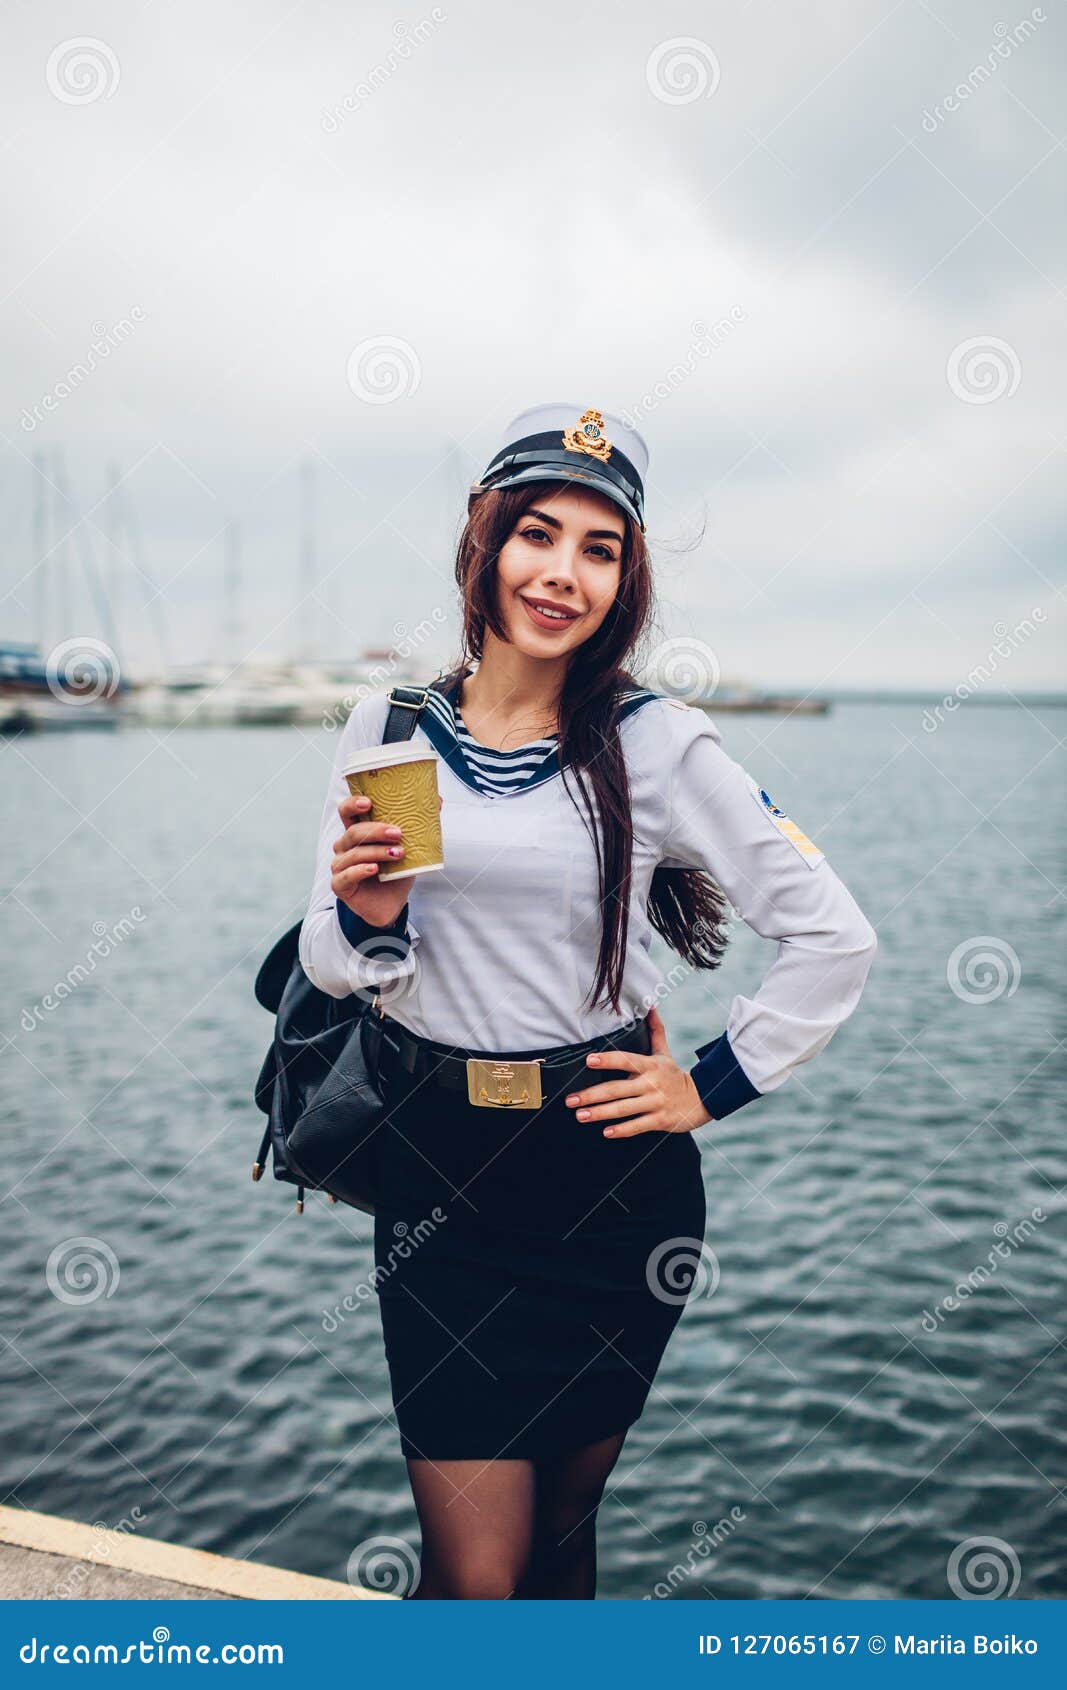 Sea wear. Девушки в морской форме. Моряки девушки форма. Красивые девушки в морской форме. Девушки морячки в форме.